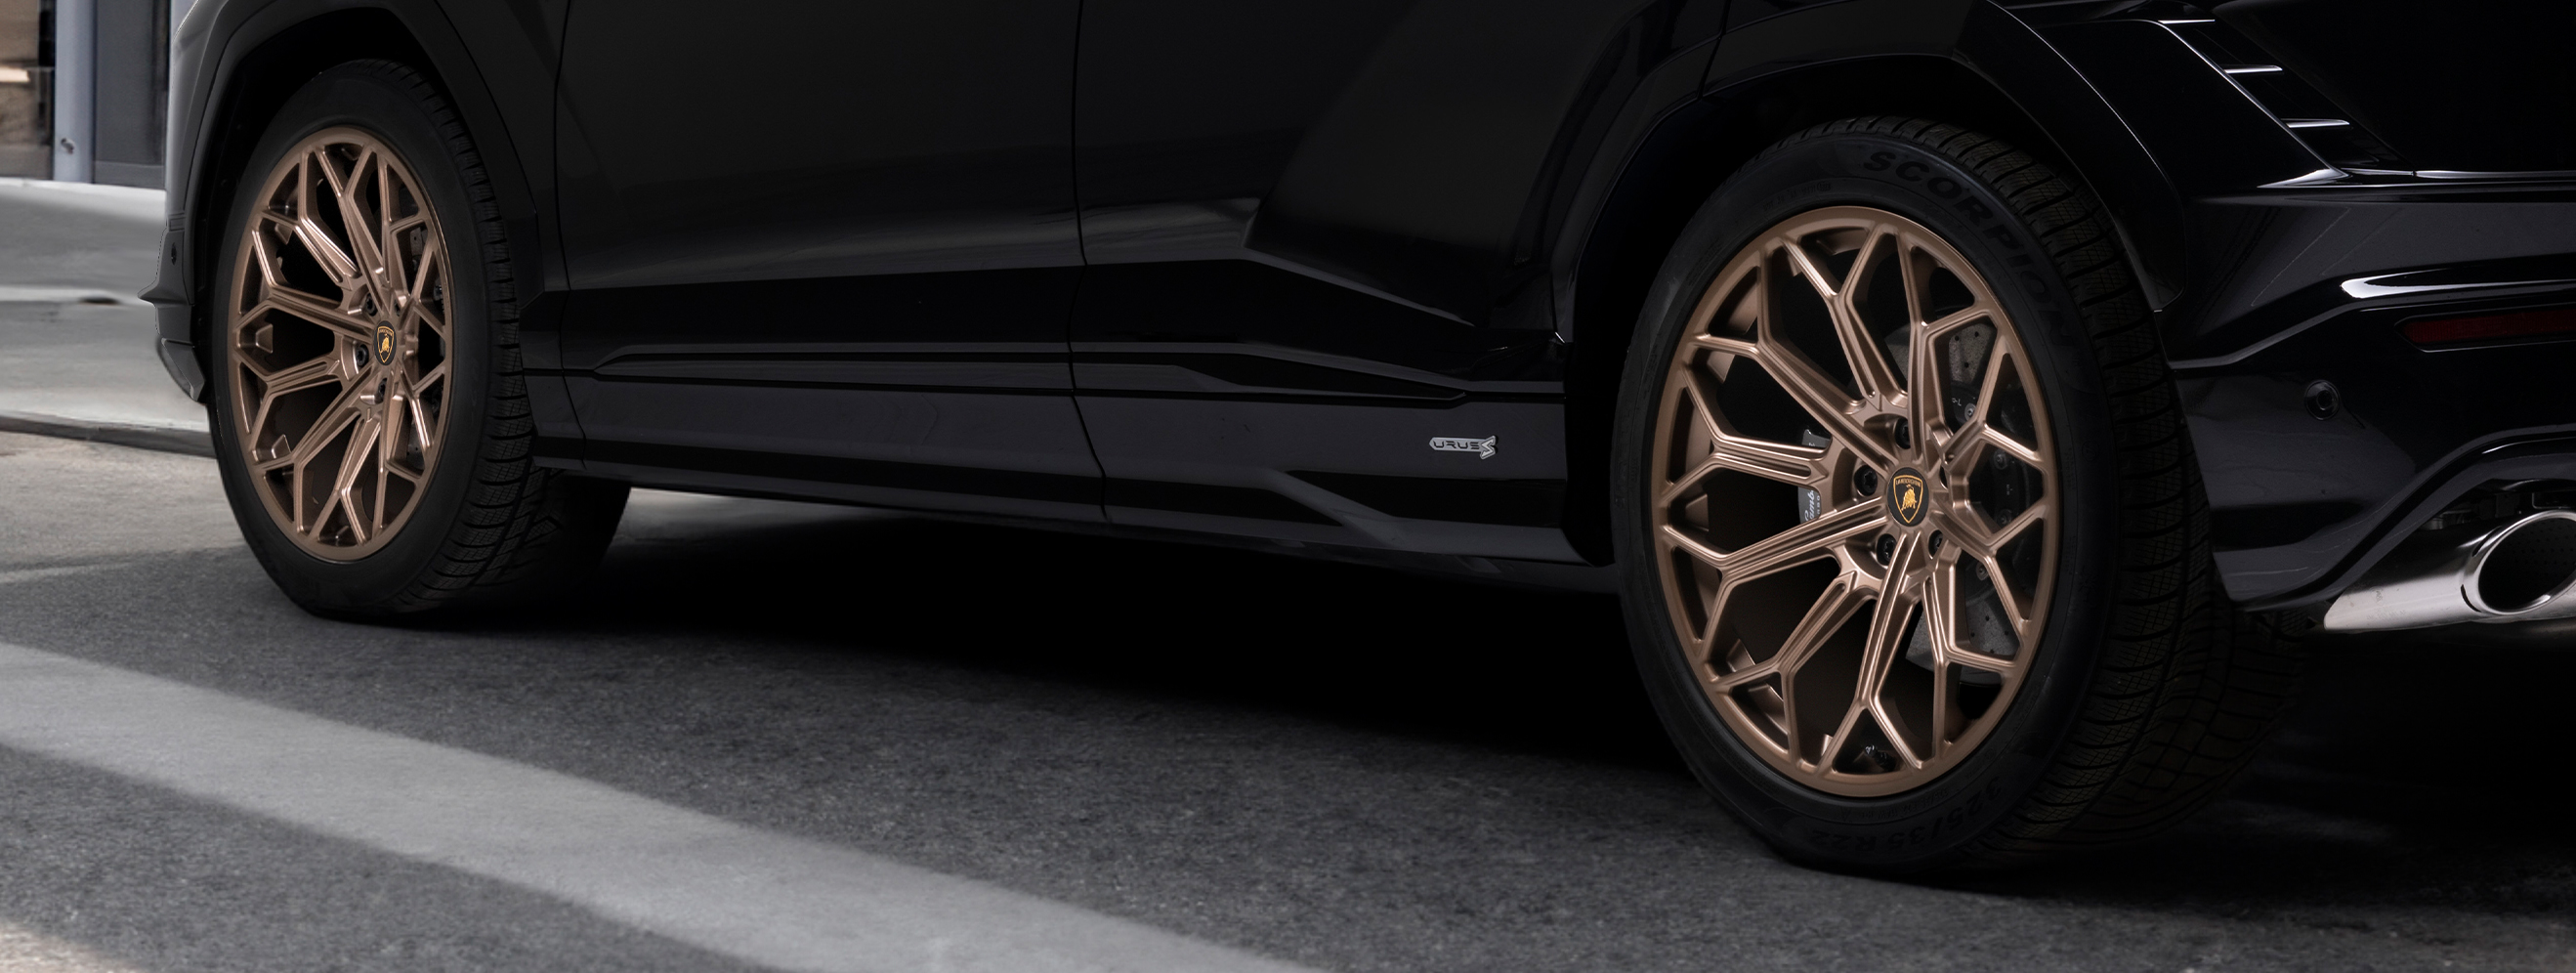 PNNNU Für Lamborghini Urus 2021 Leder-Autoschlüssel-Etui-Abdeckung